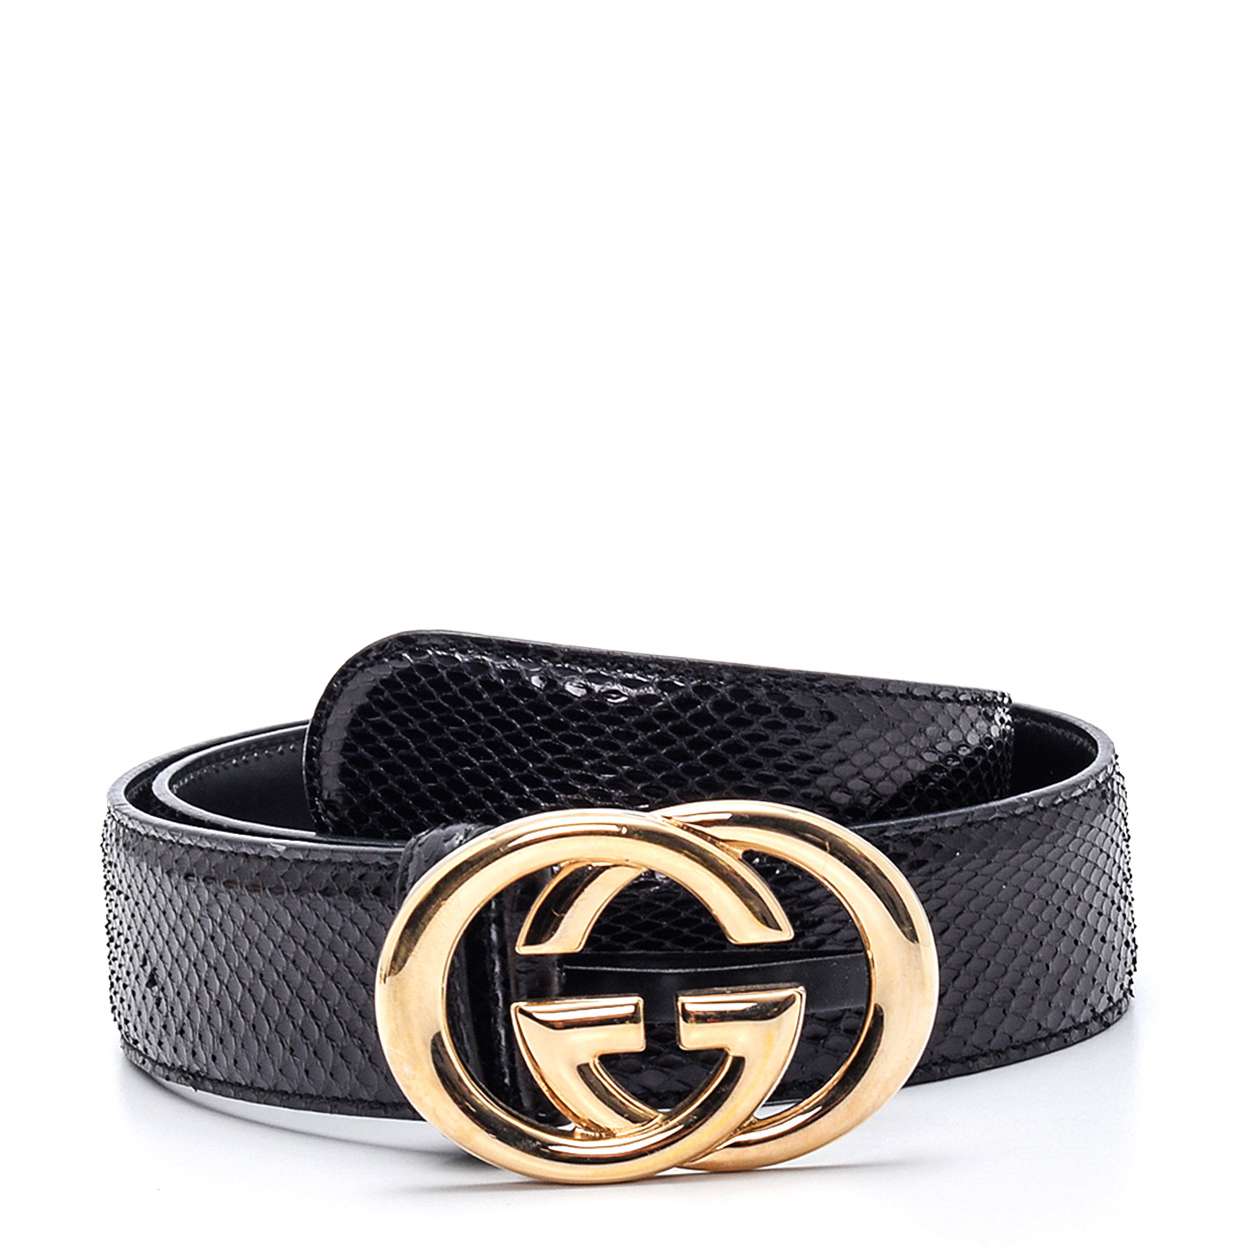 Gucci - Black Python Leather Belt